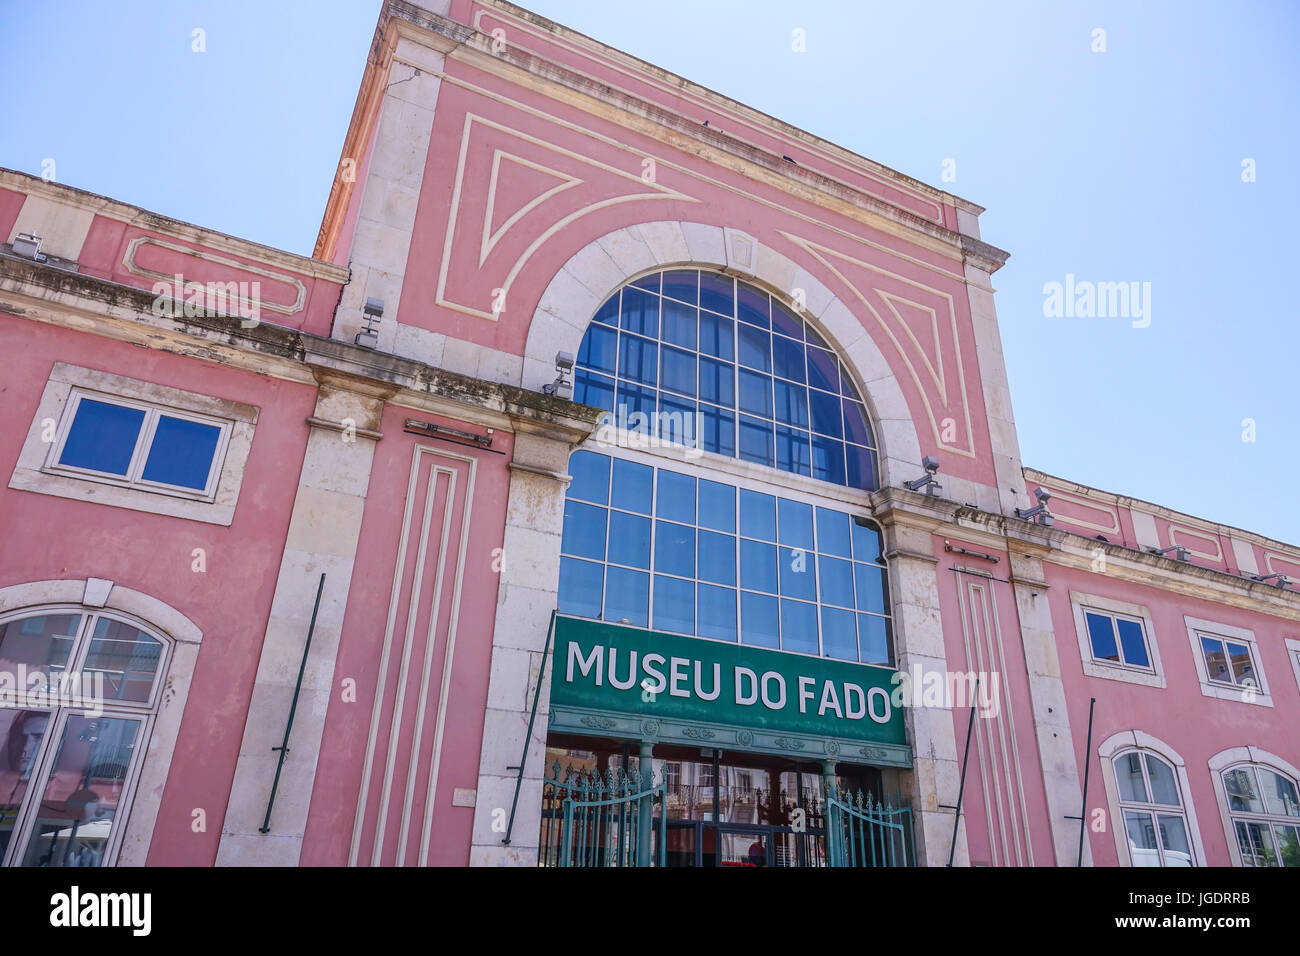 Fado museum in Lisbon - very popular in Portugal - LISBON - PORTUGAL 2017 Stock Photo